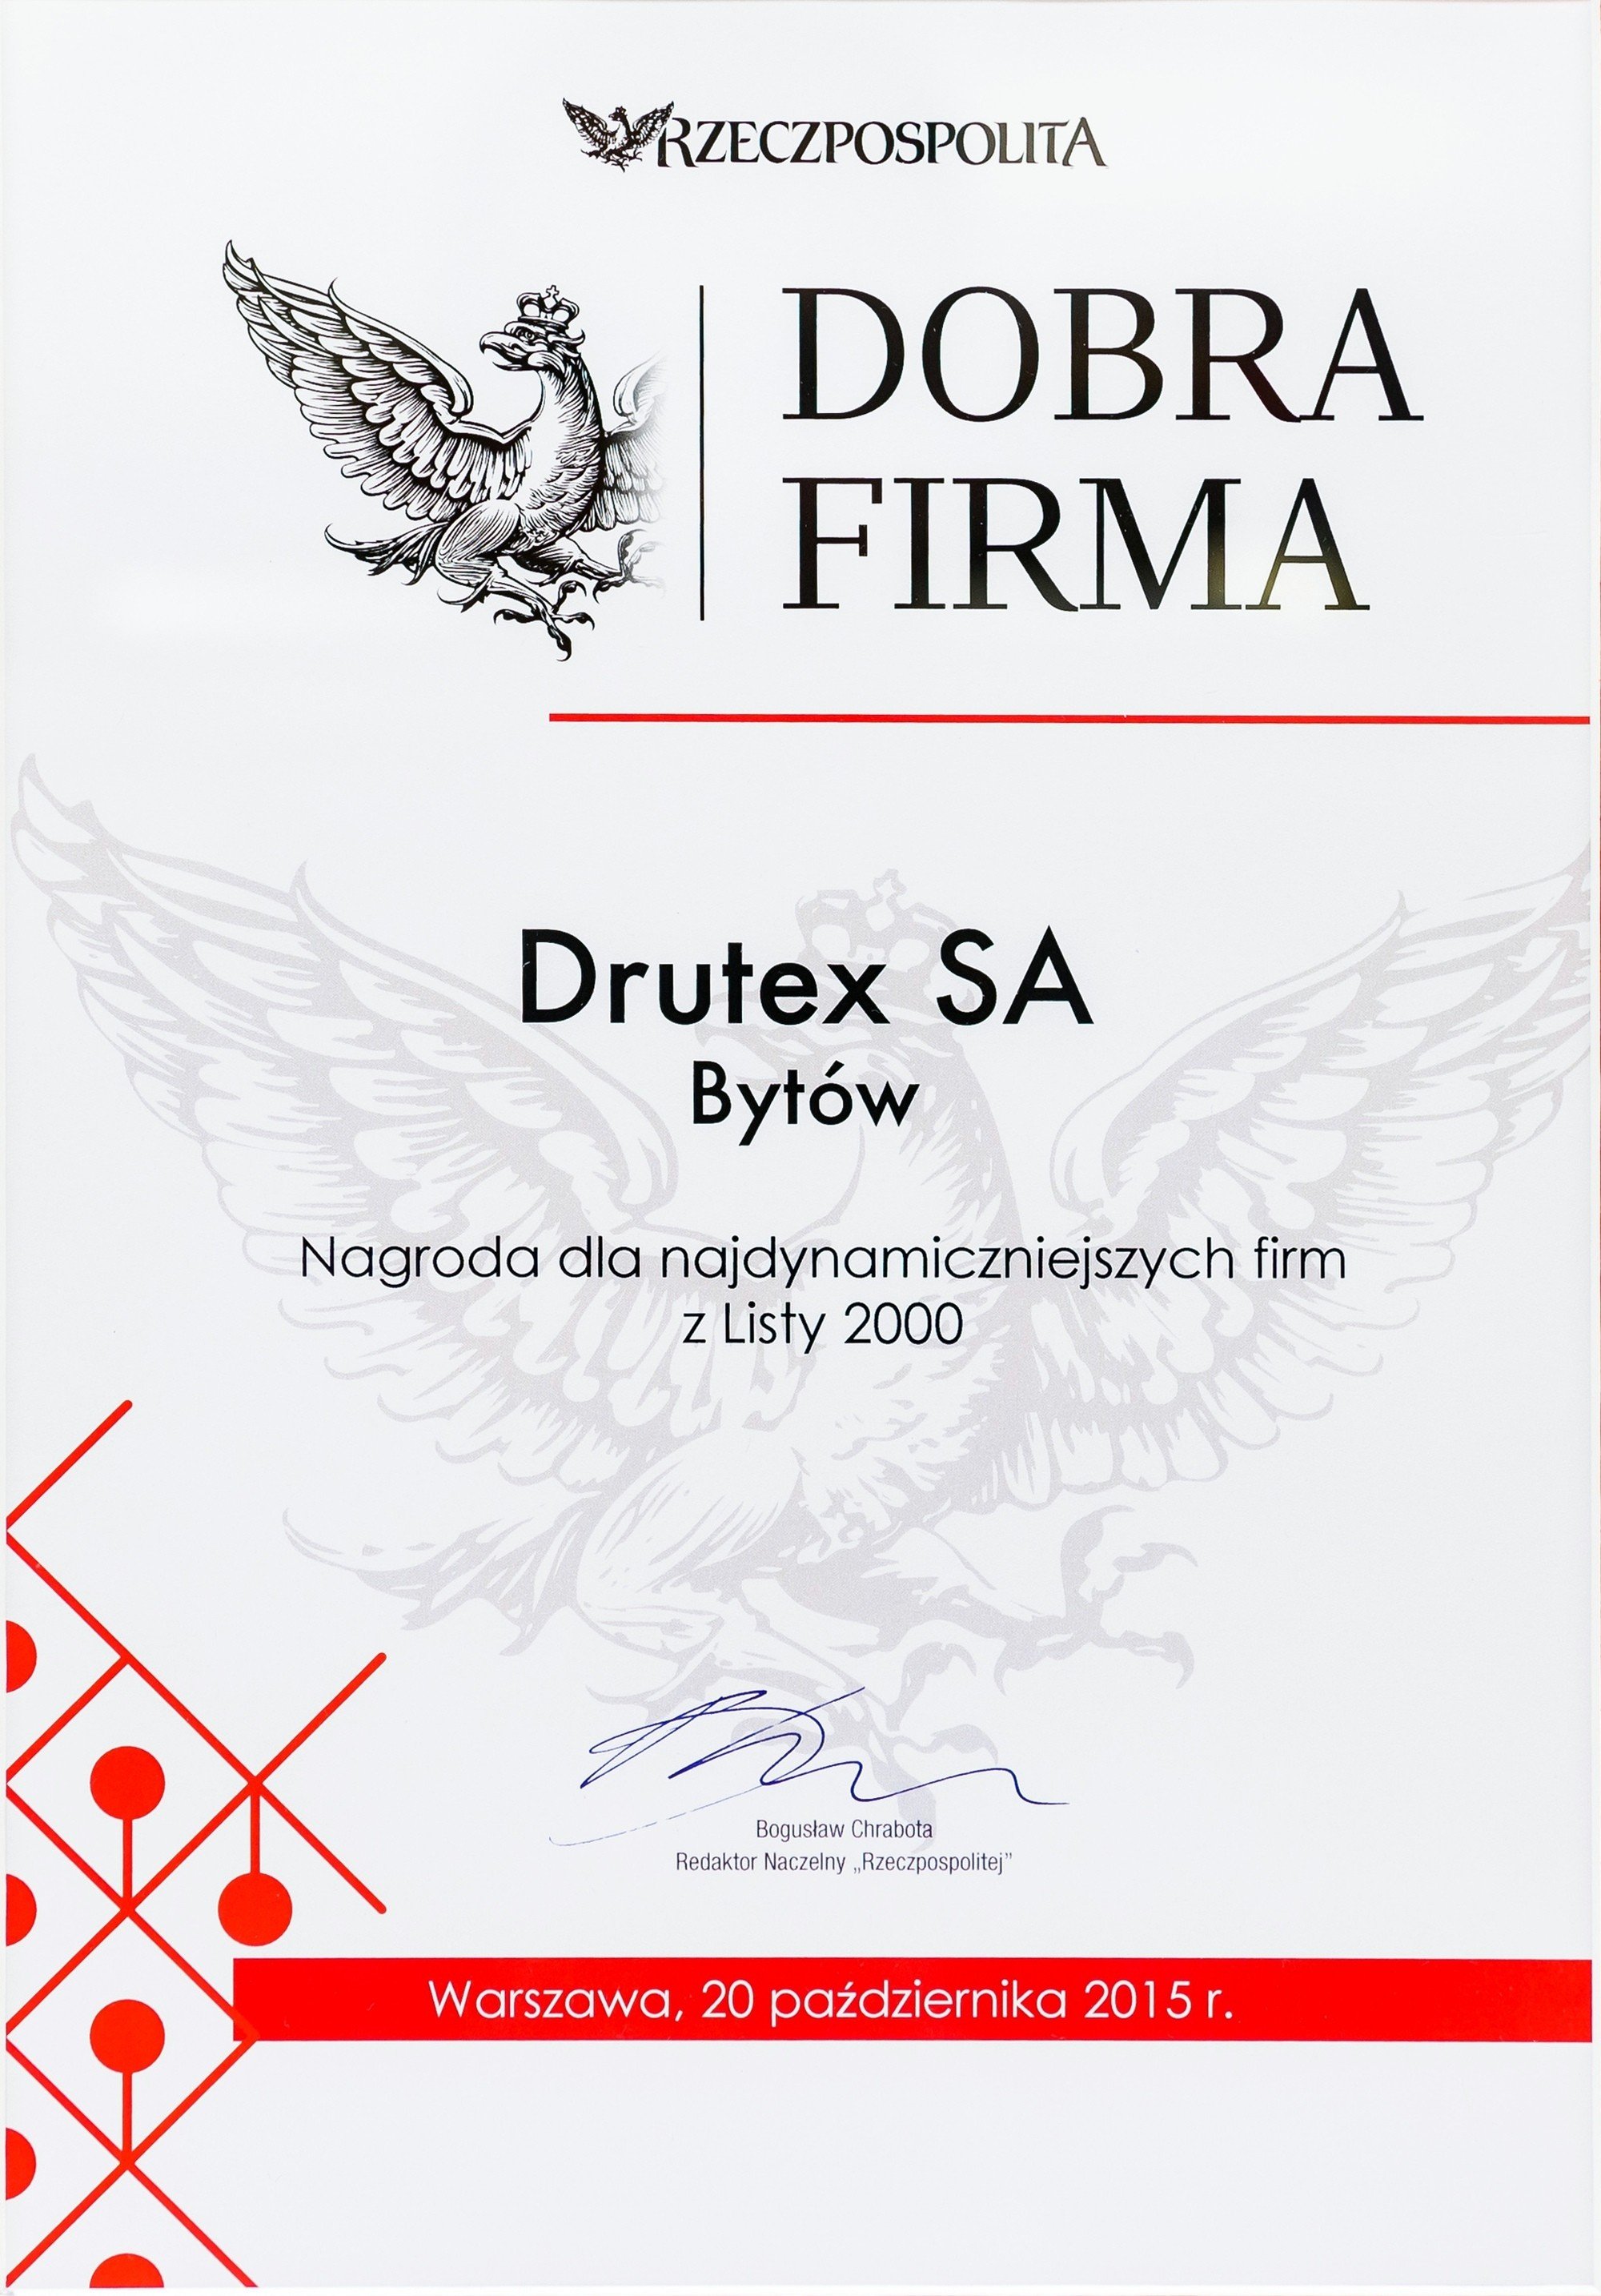 DRUTEX among the 20 best Polish companies.